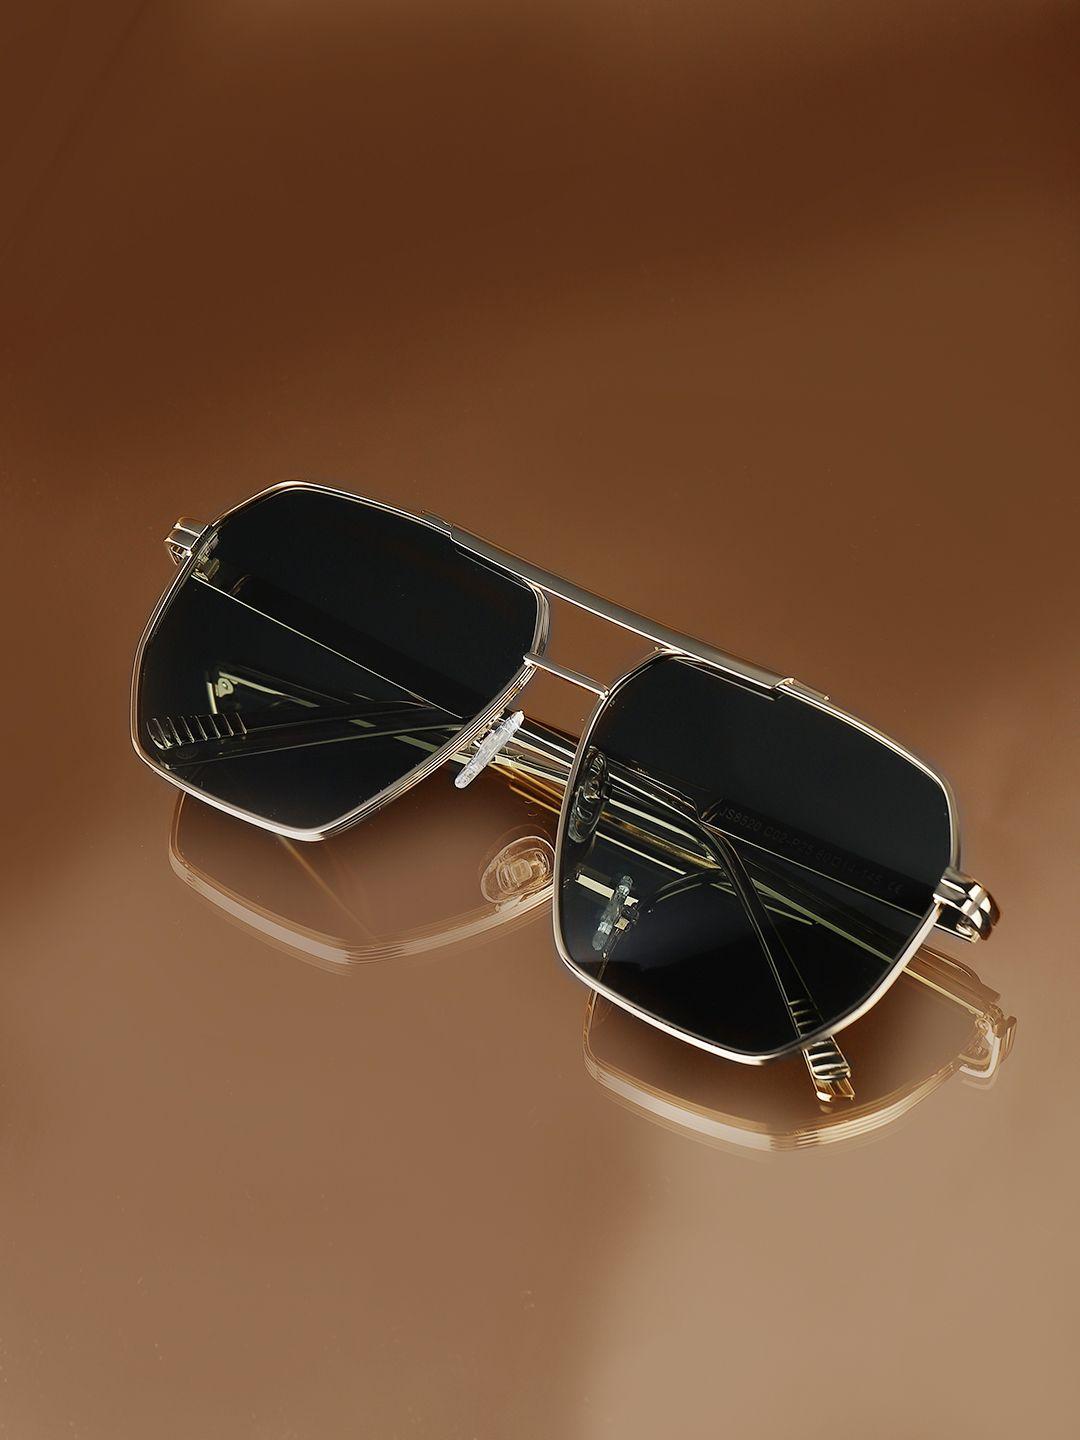 carlton london premium men rectangle sunglasses with polarised & uv protected lens clsm138